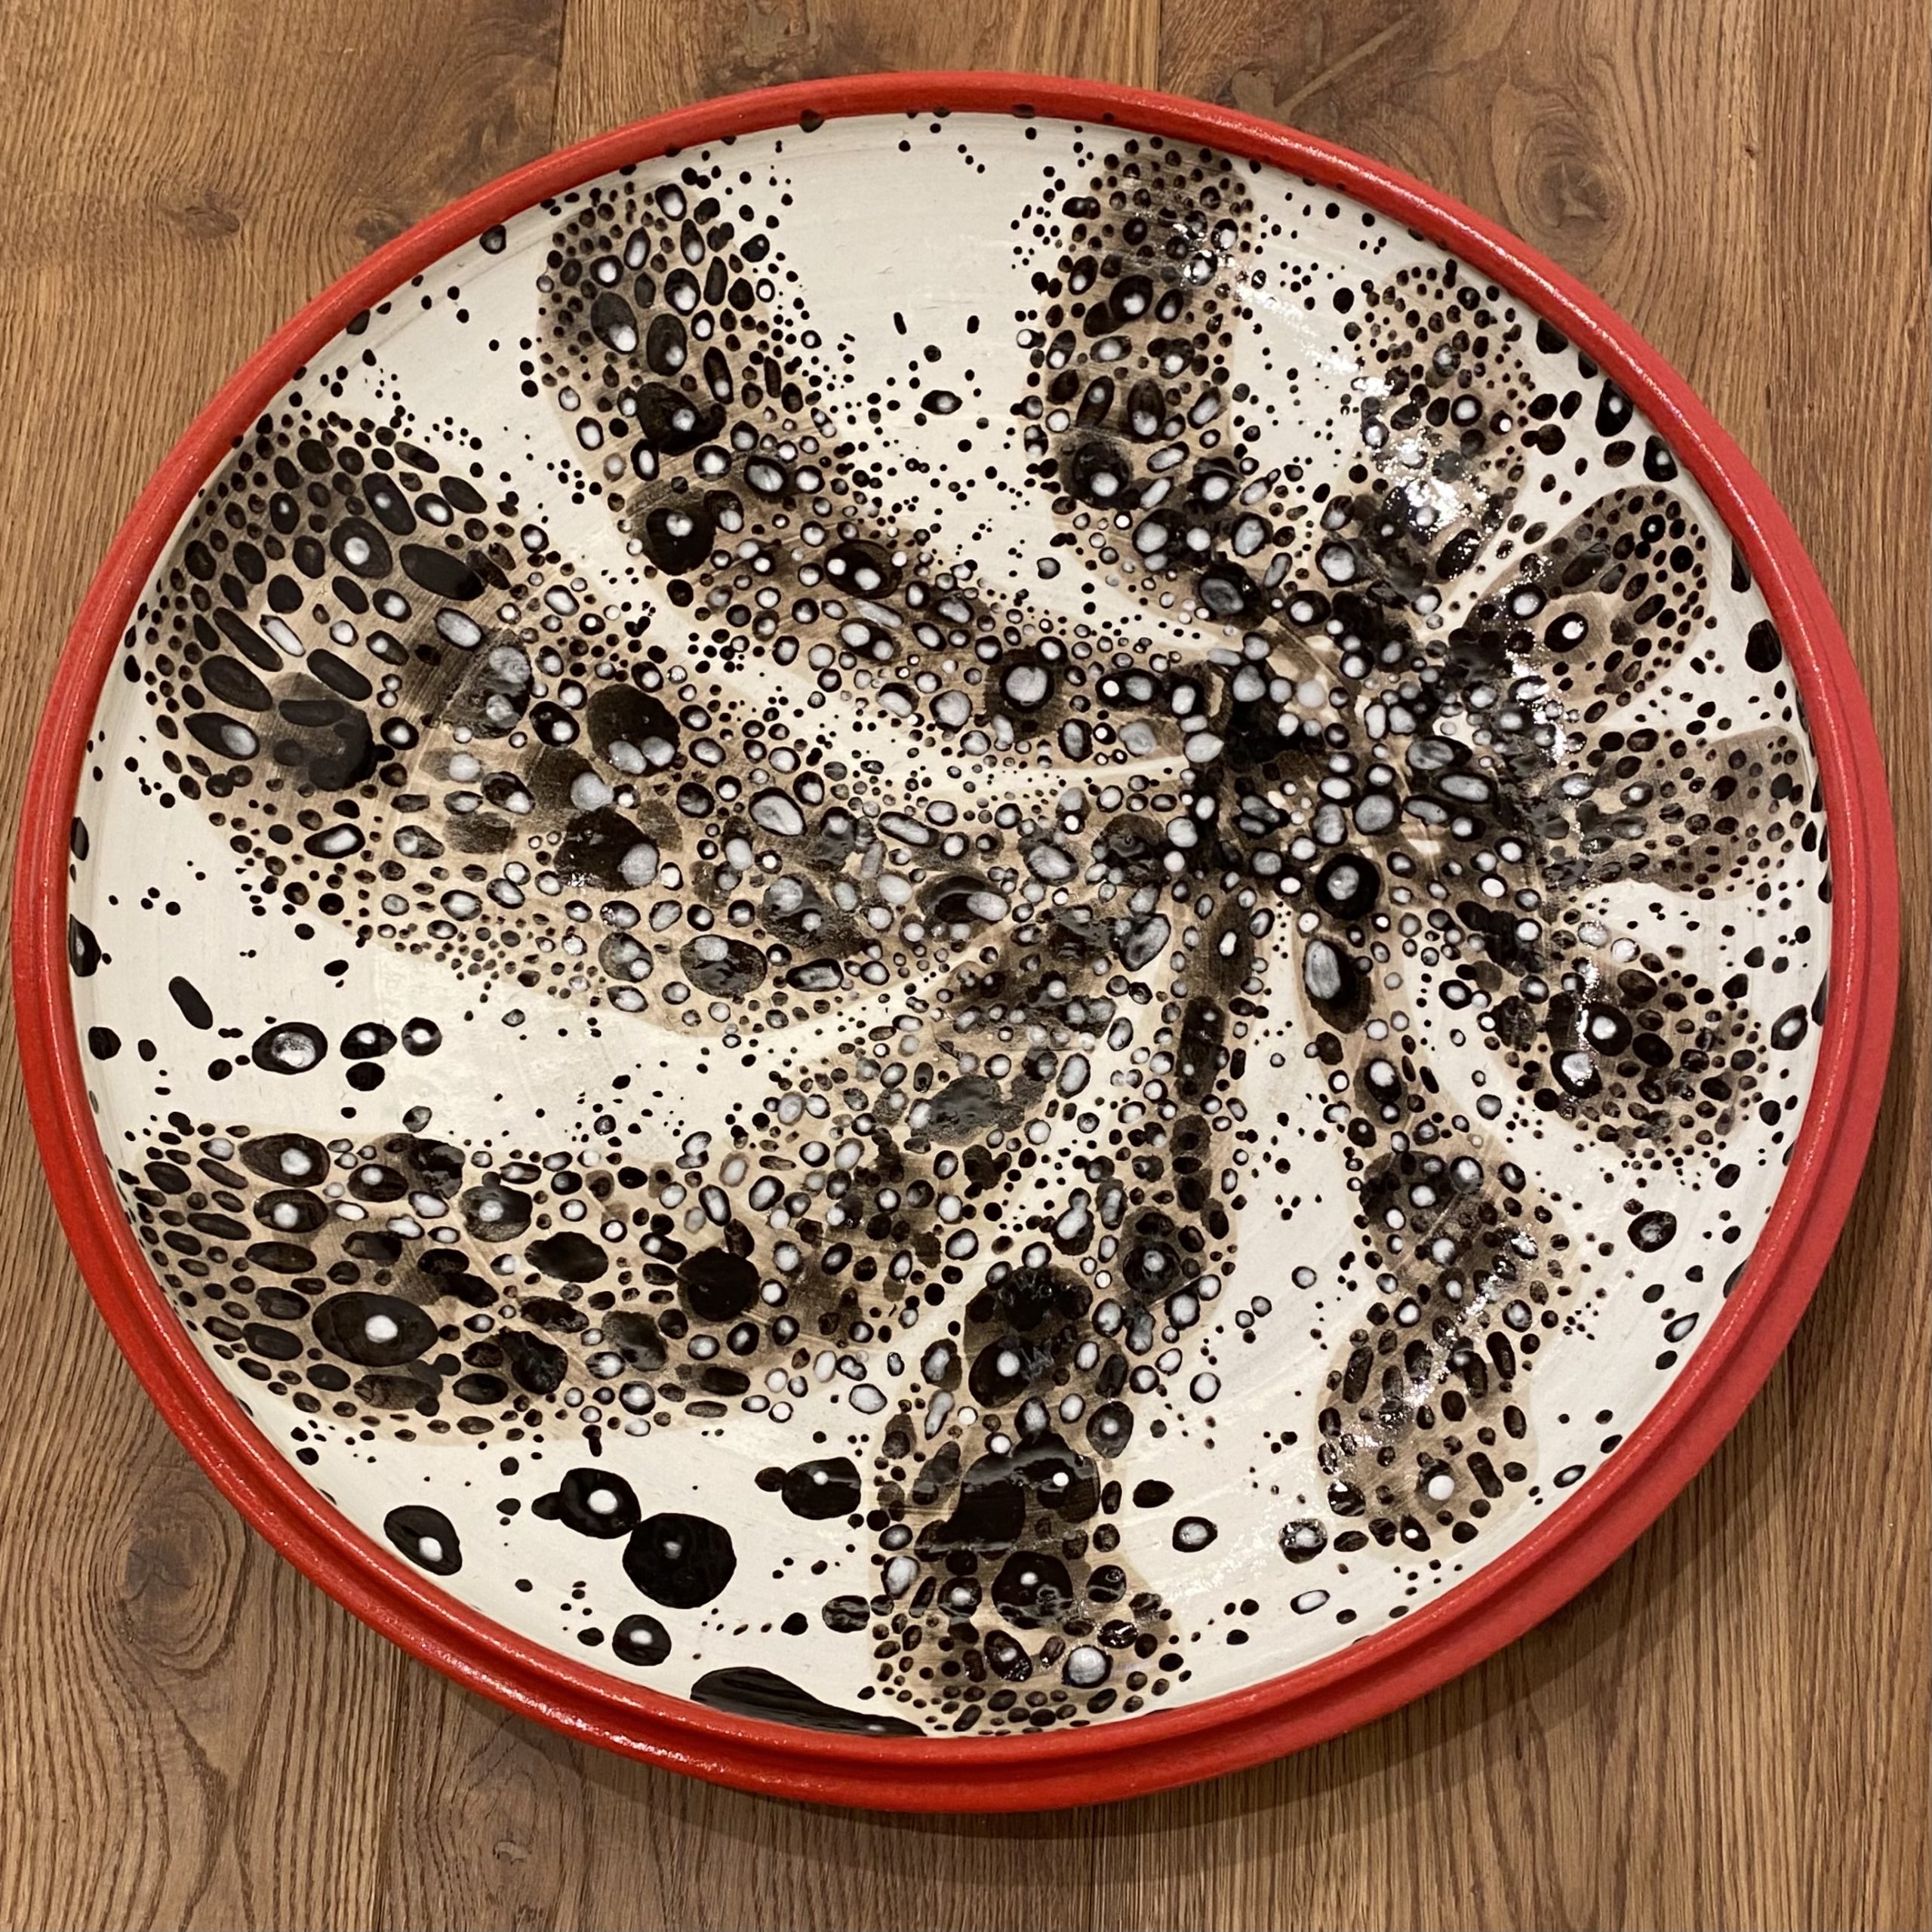 Black and White Platter 2  3 ½” x 19” diameter  White Stoneware with underglaze and clear glaze  $650